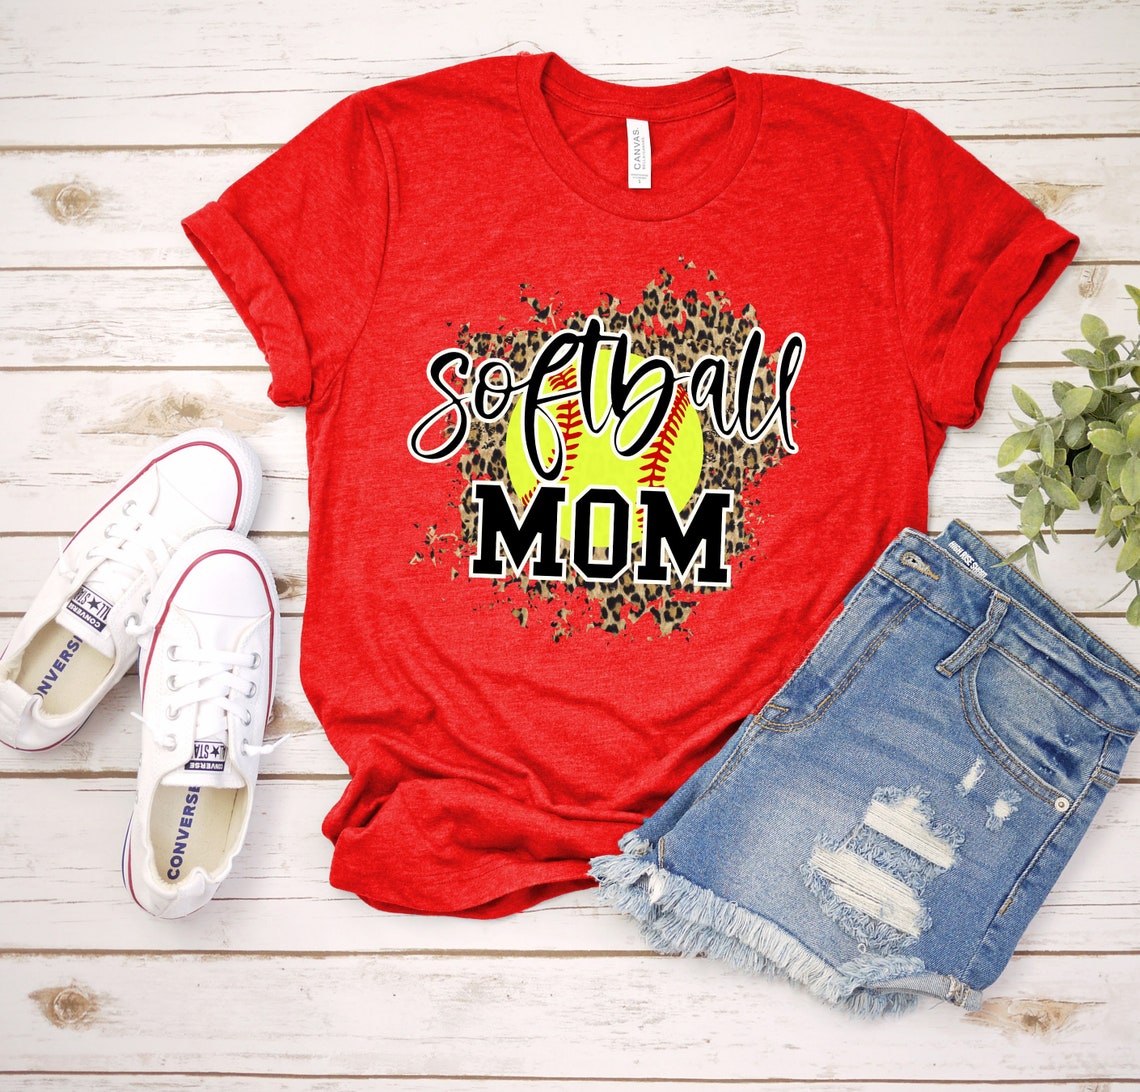 Softball mom shirt, softball mom shirts for women